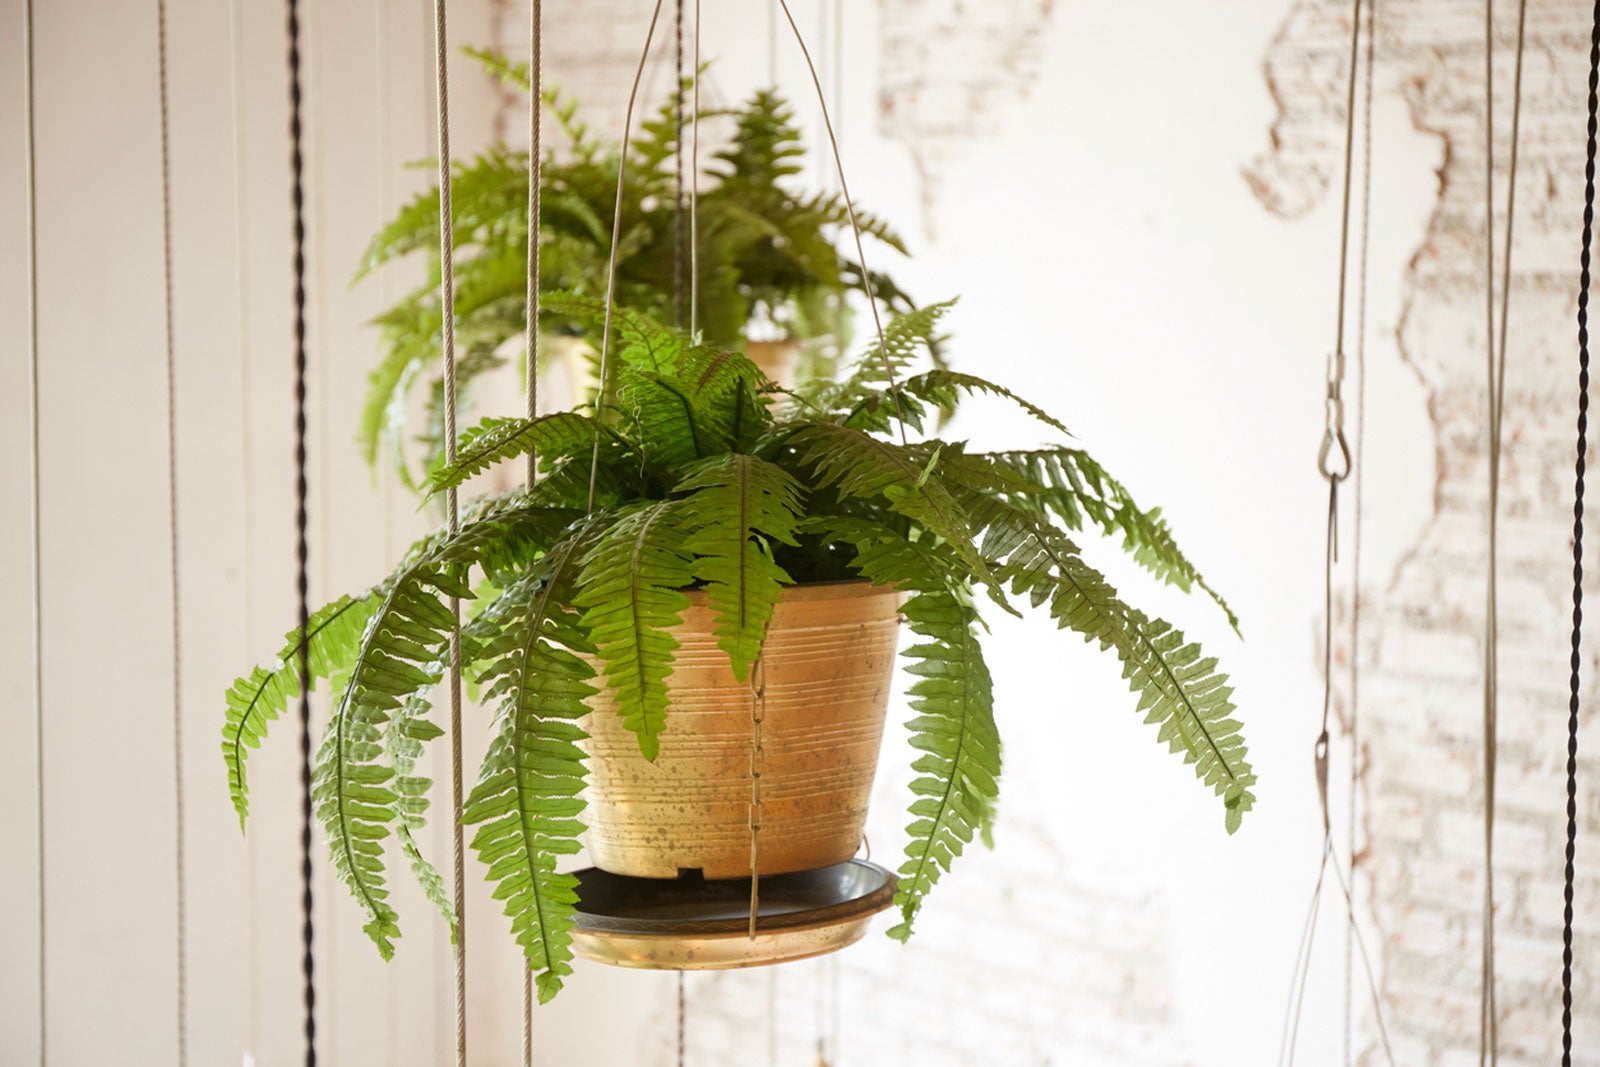 Defilé Vorming waardigheid Hanging Baskets In The Home – Caring For Hanging Baskets Inside